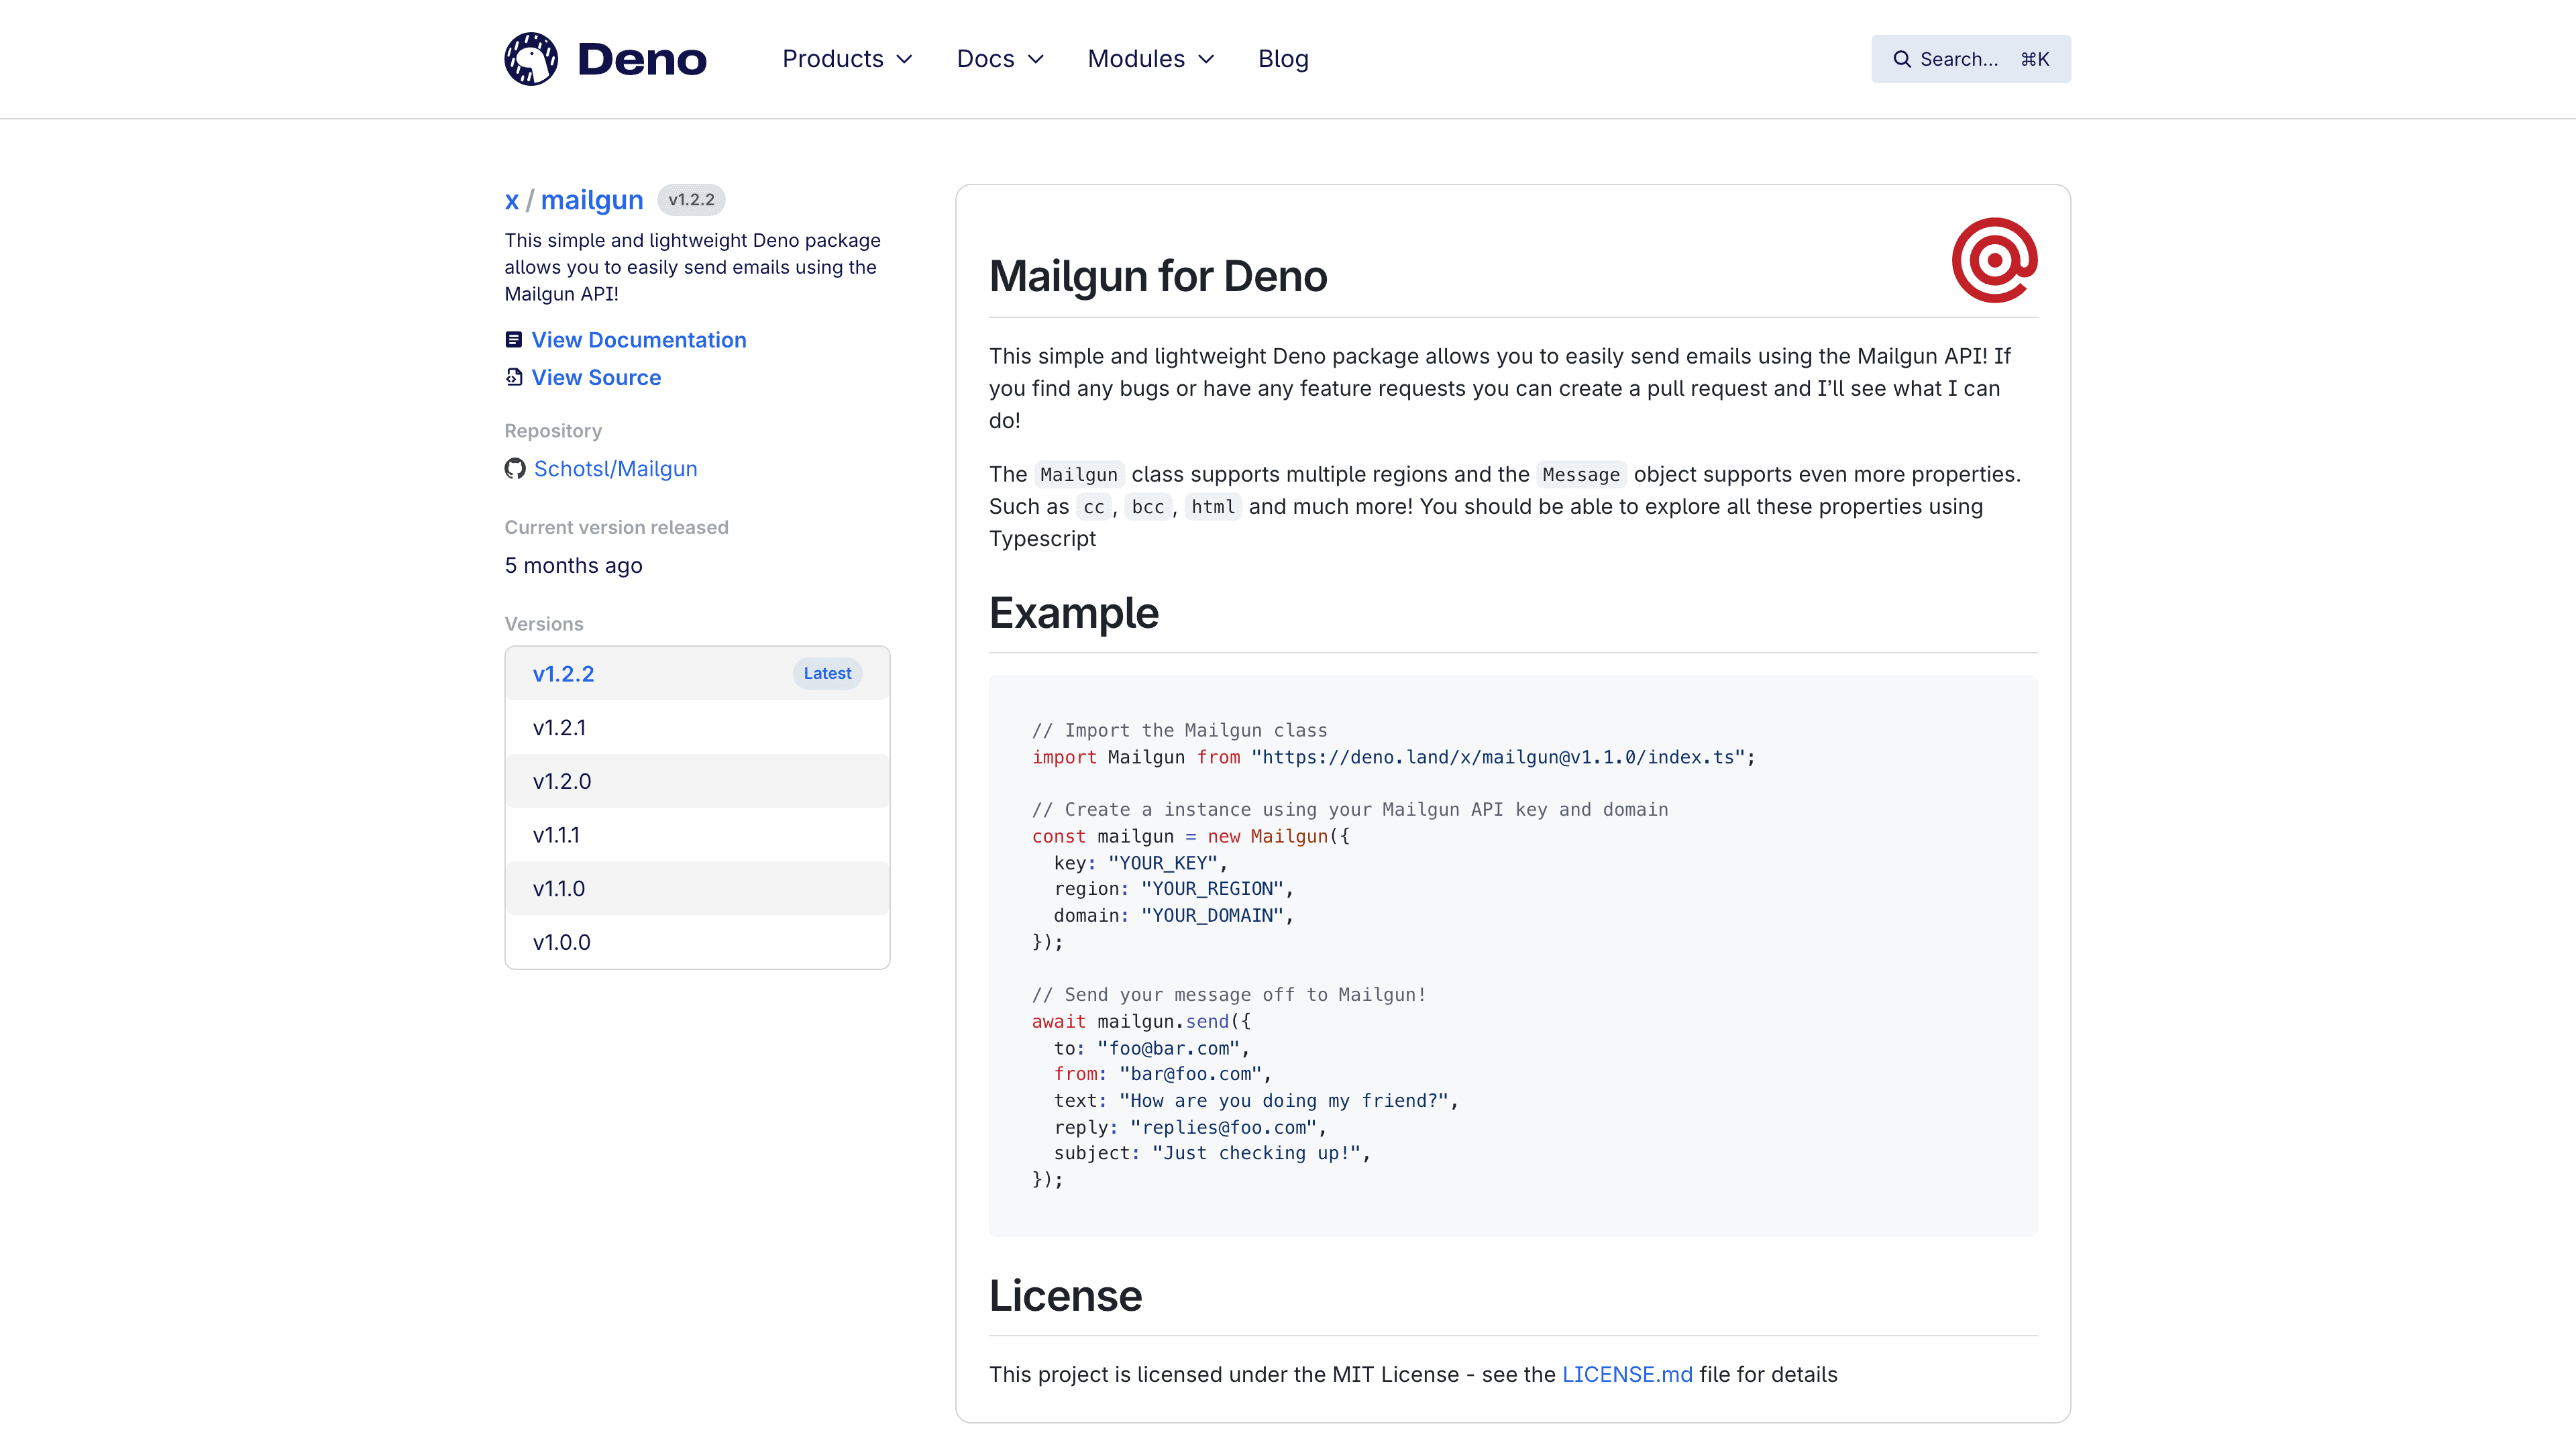 Mailgun's Deno Third Party Modules page.